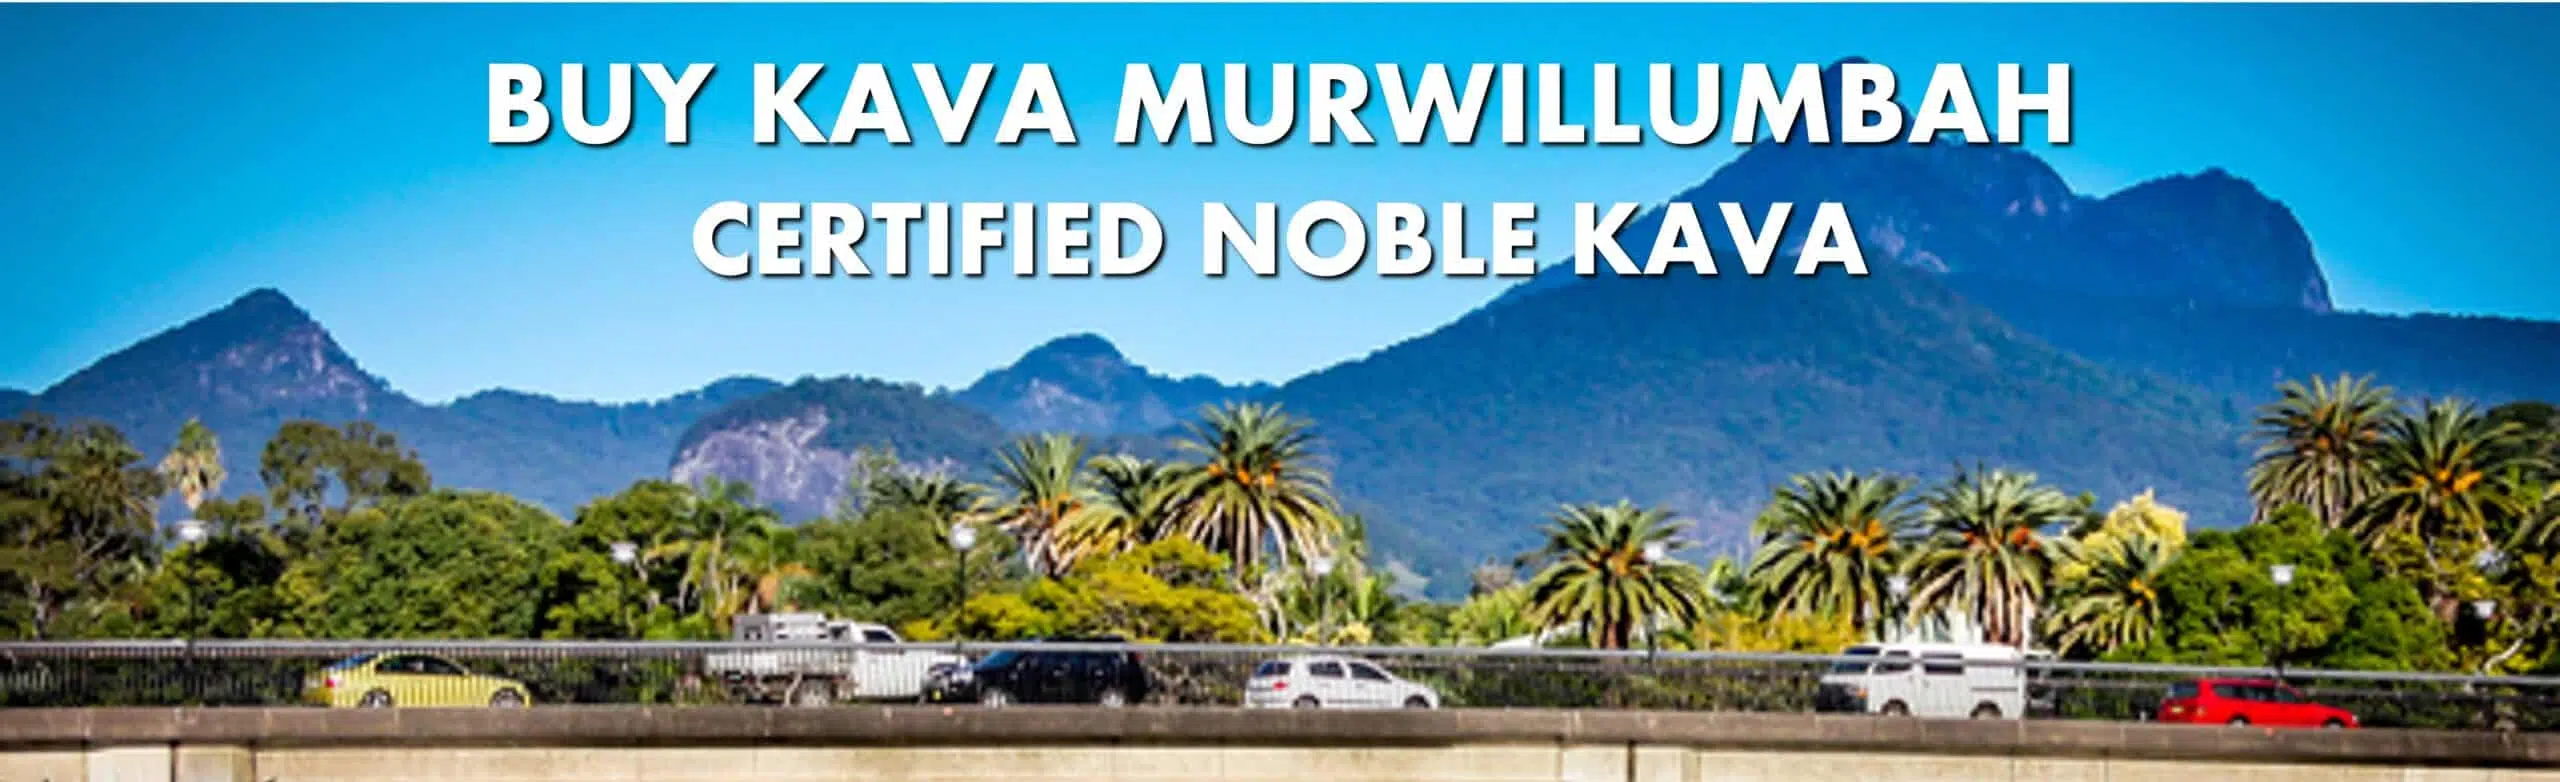 Bridge over Tweed River in Murwillumbah New South Wales with caption Buy Kava Murwillumbah Certified Noble Kava